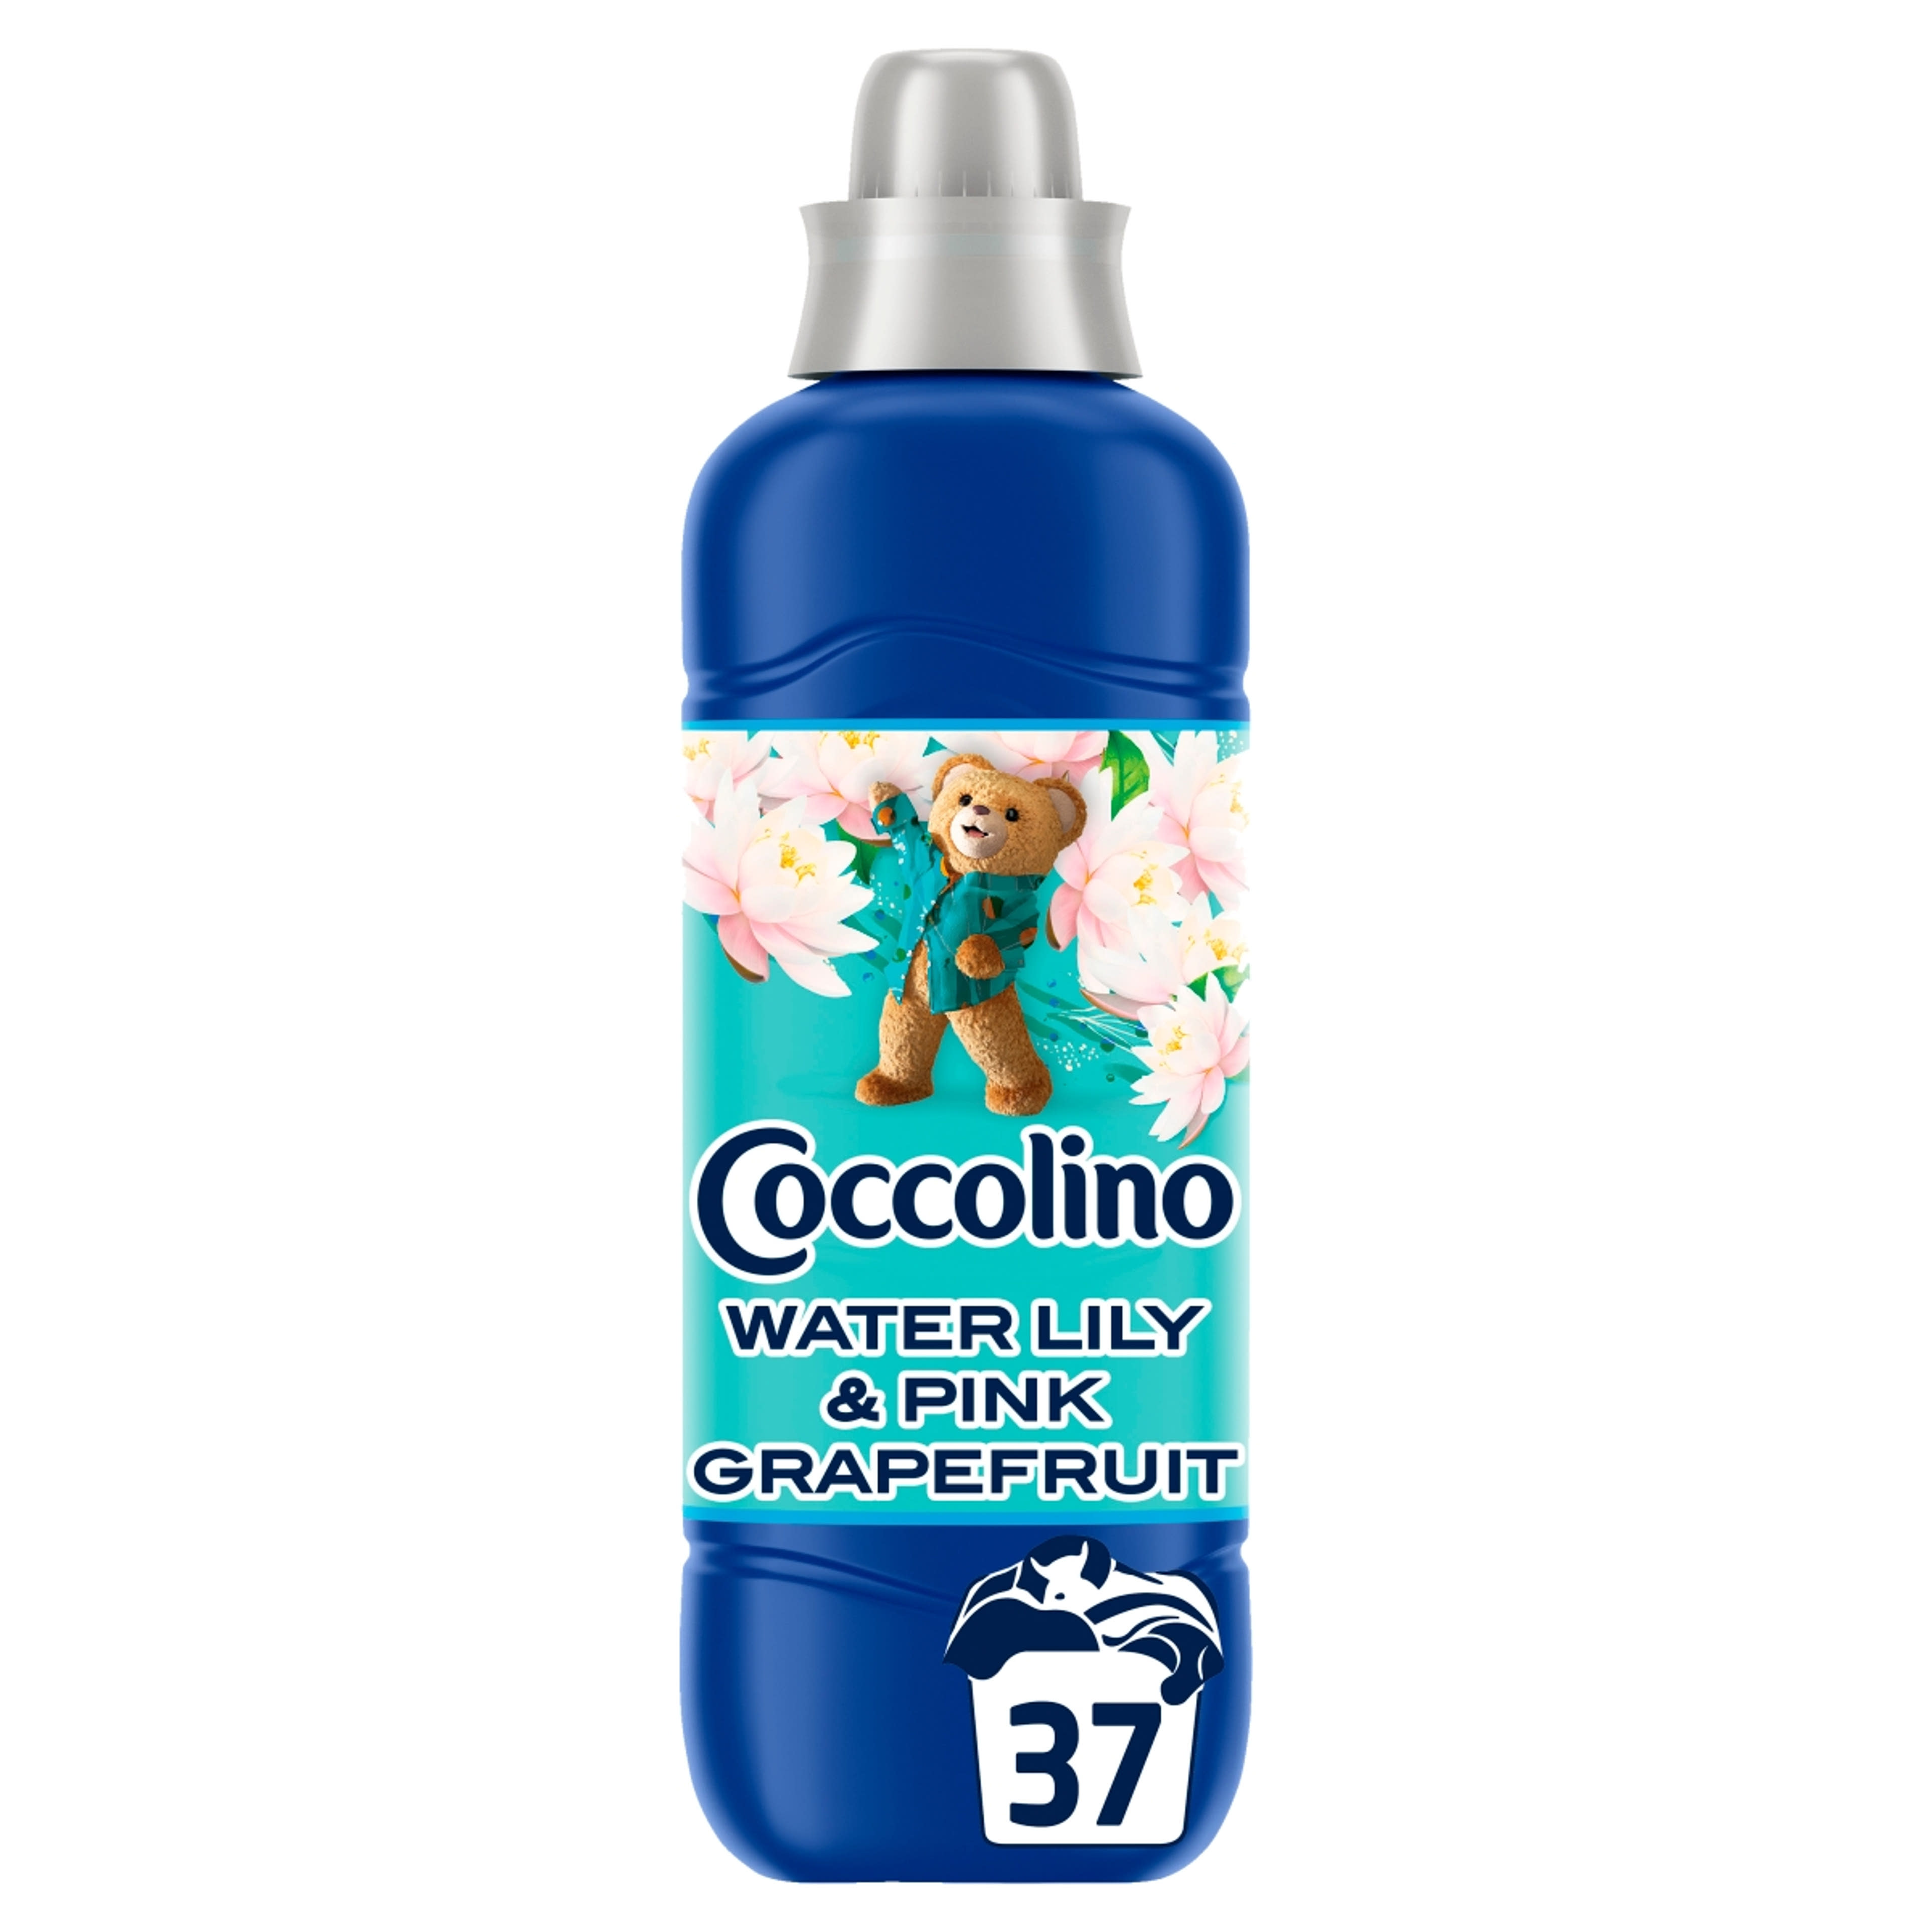 Coccolino Perfume & Care Water Lily & Pink Grapefruit öblítőkoncentrátum 37 mosás - 925 ml-3